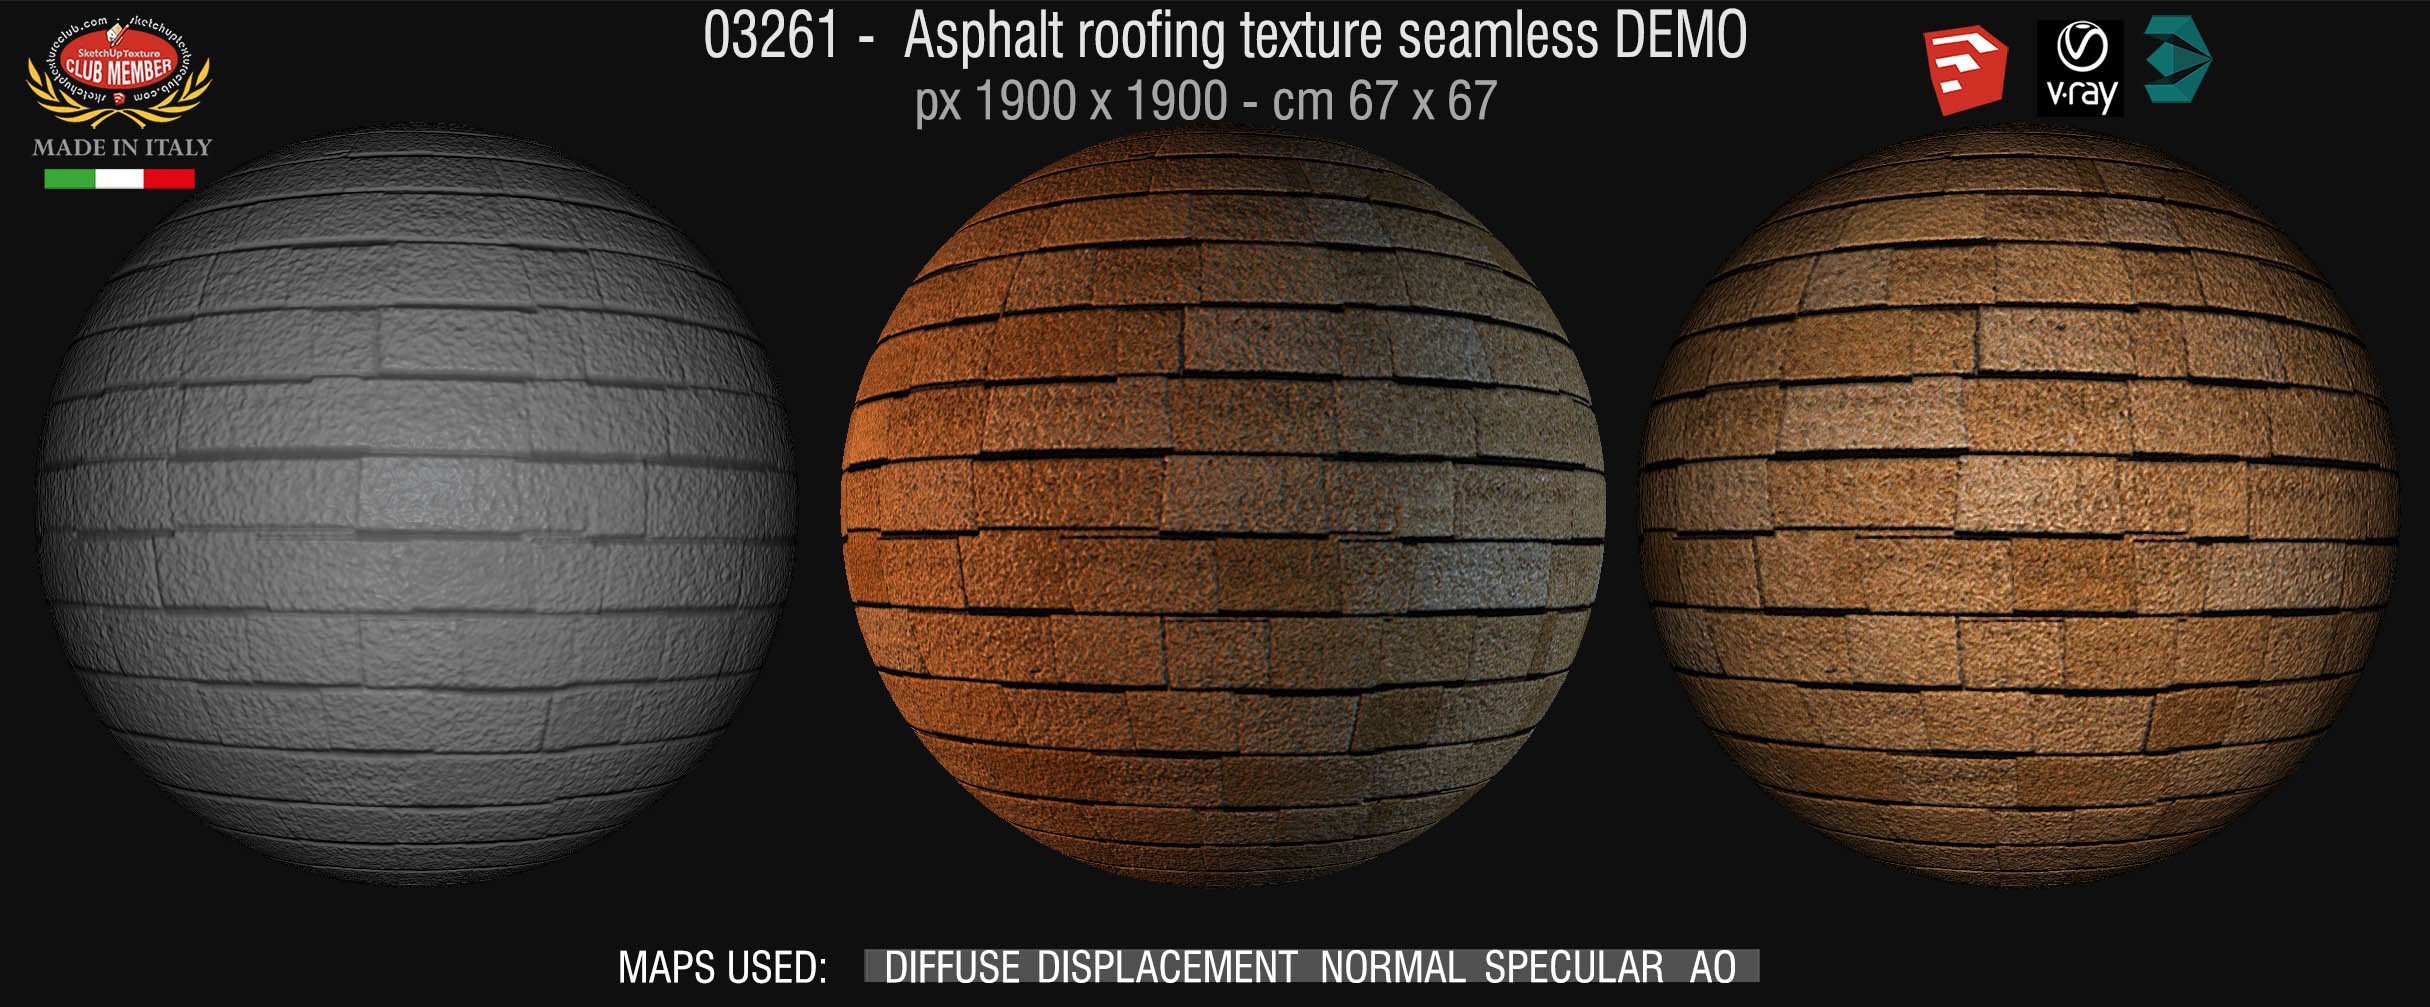 03261 Asphalt roofing texture seamless + maps DEMO